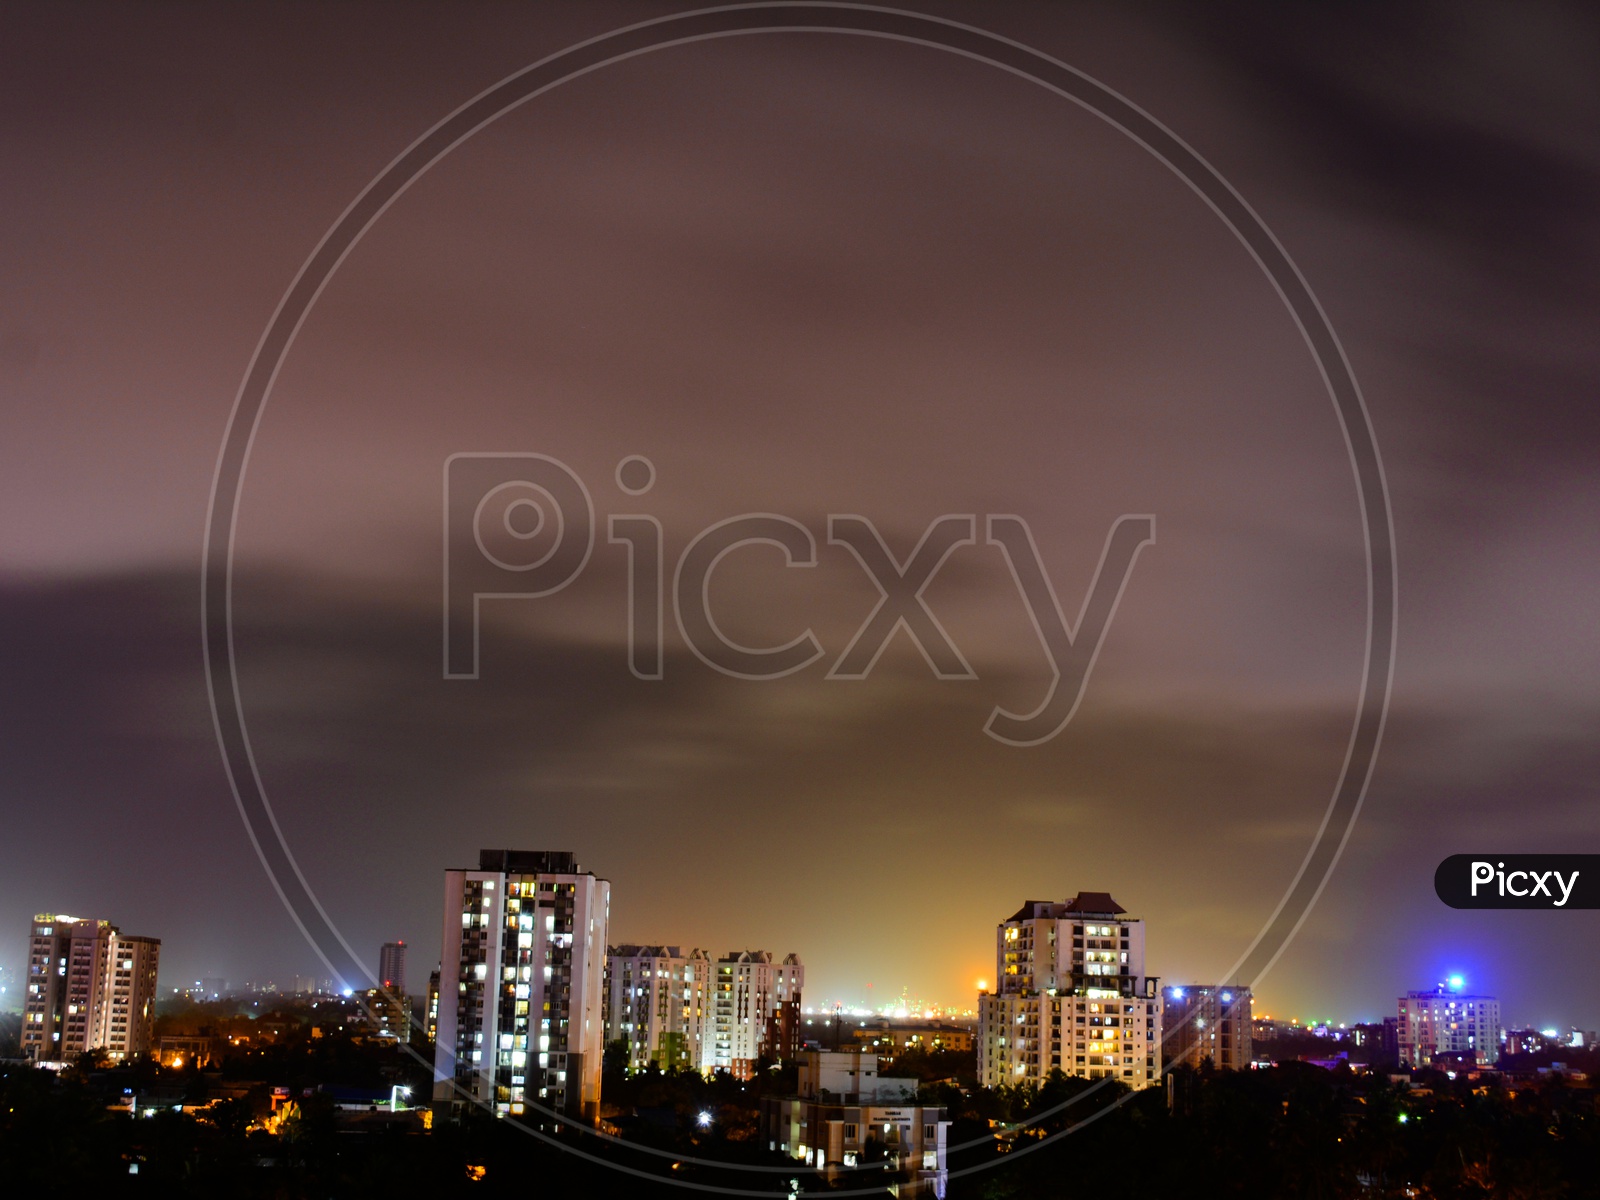 A cloudy night cityscape